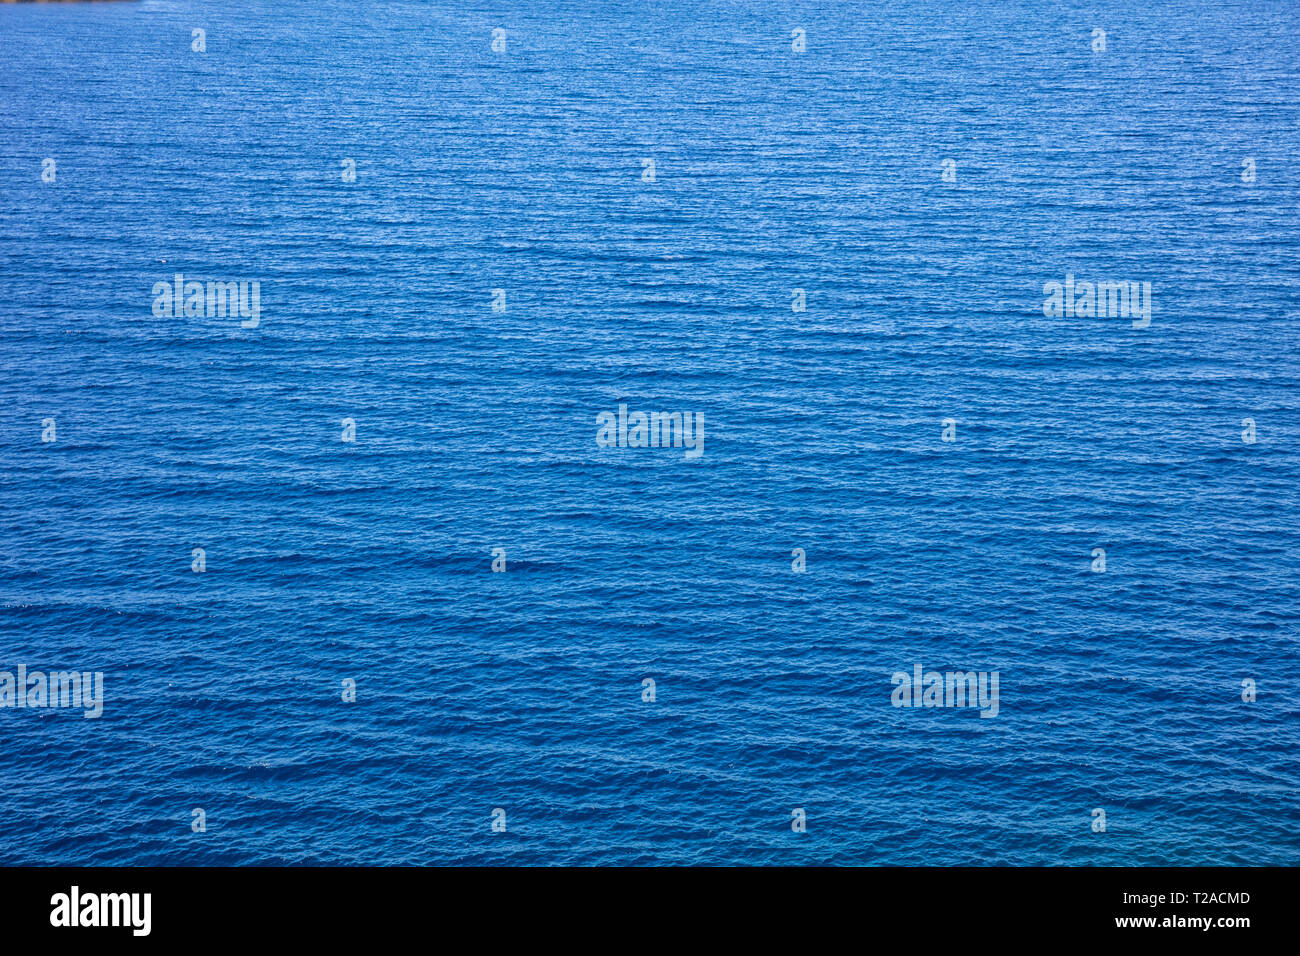 Blue sea water Oberfläche. Ägäis ruhig mit Wellen Hintergrund Textur, hohe Betrachtungswinkel Stockfoto